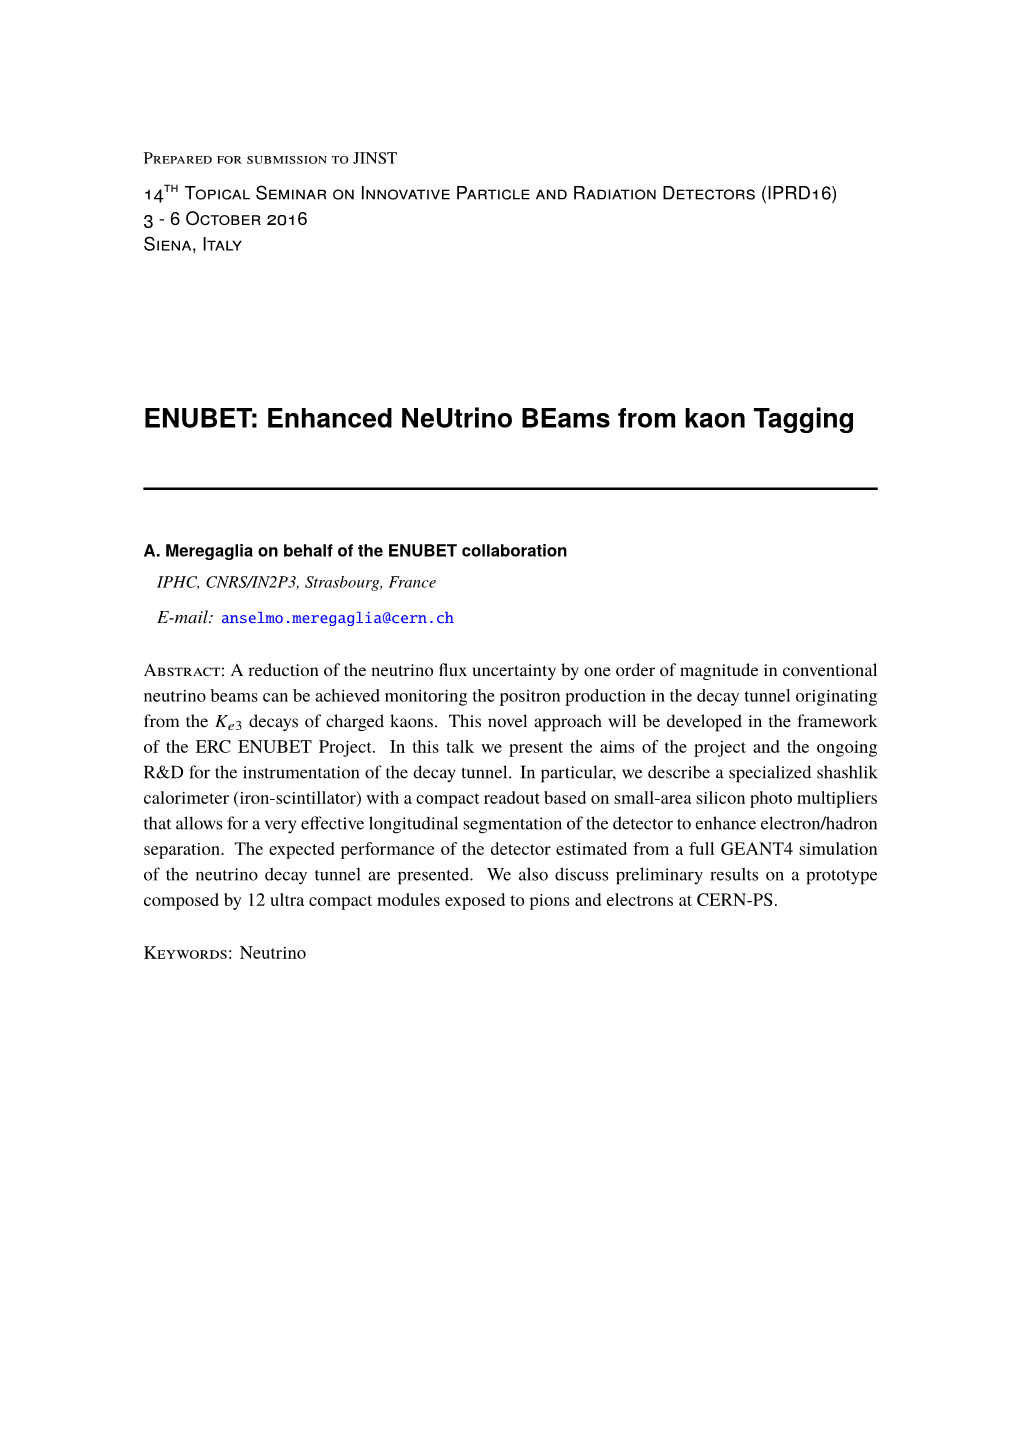 ENUBET: Enhanced Neutrino Beams from Kaon Tagging